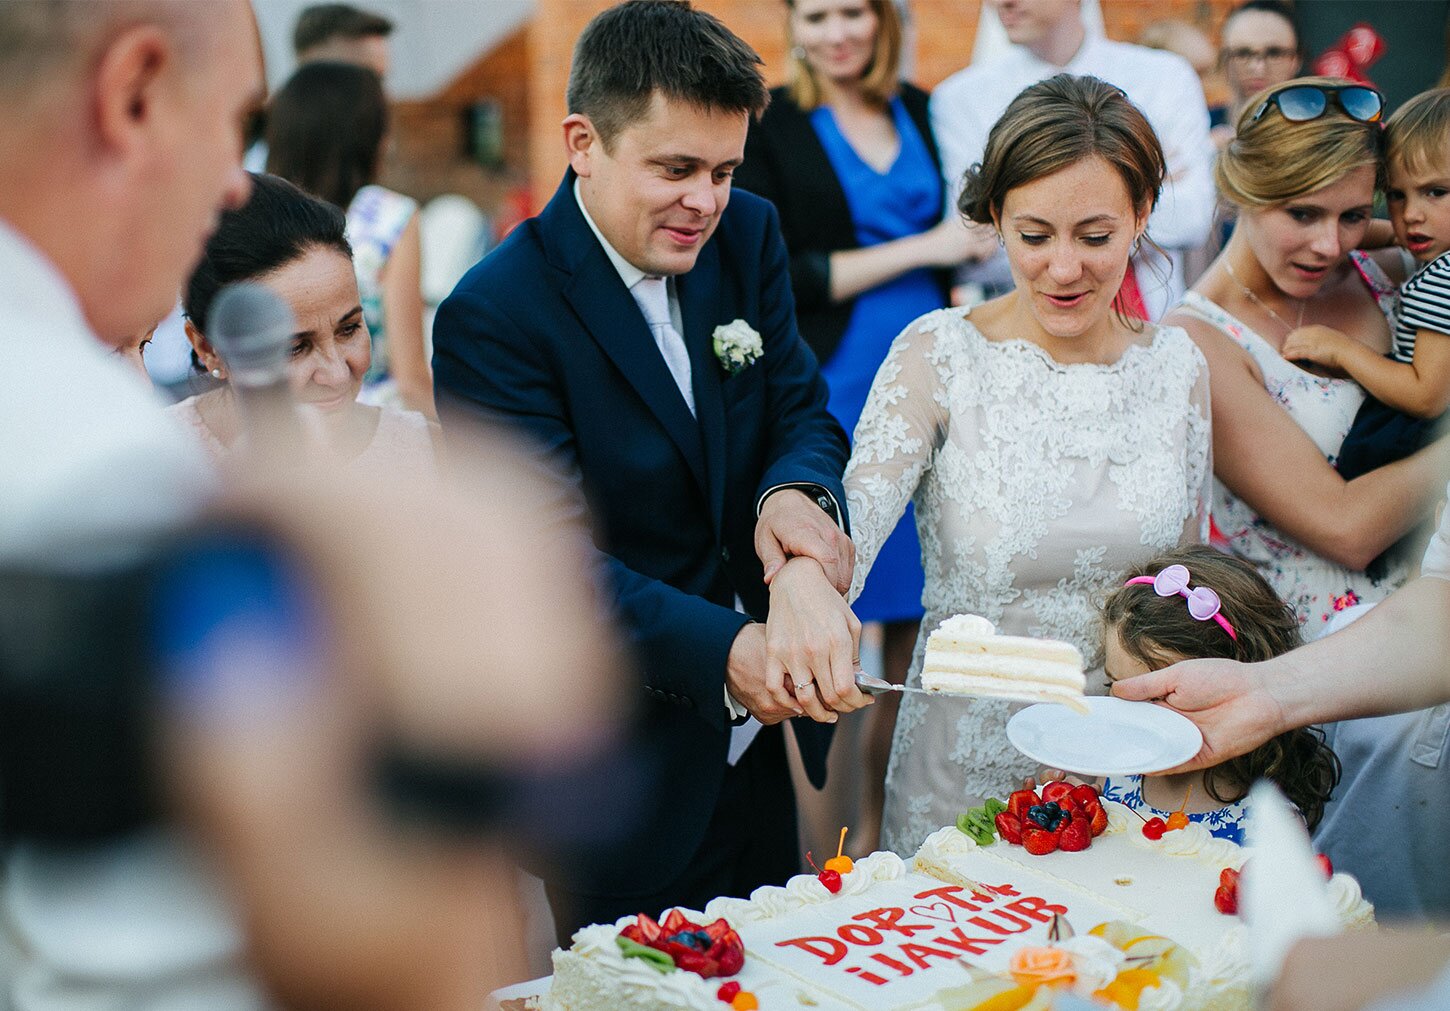 Photography of the newlyweds cutting the wedding cake